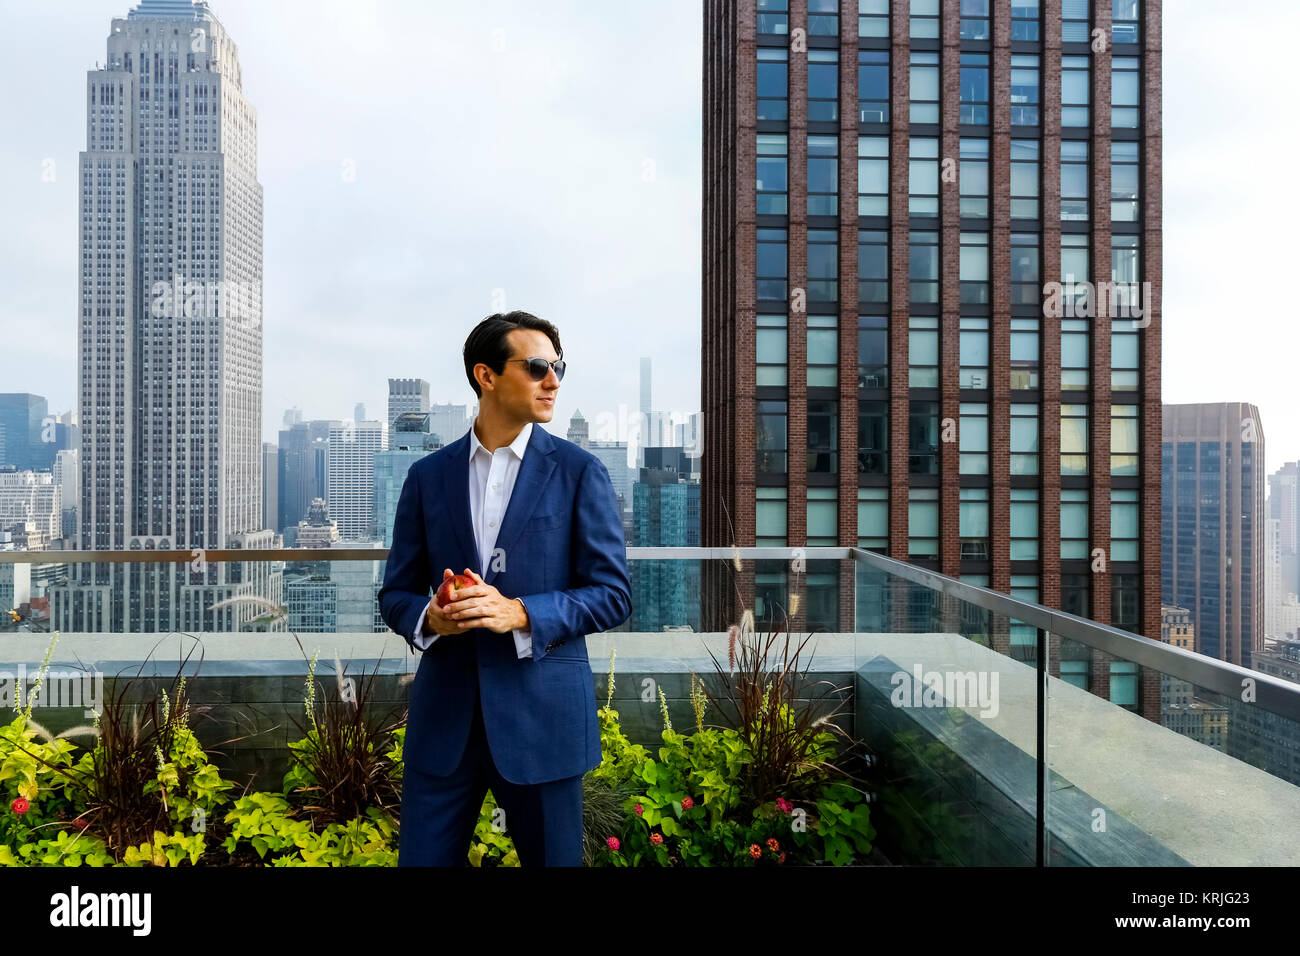 Caucasian businessman holding apple on urban rooftop Stock Photo